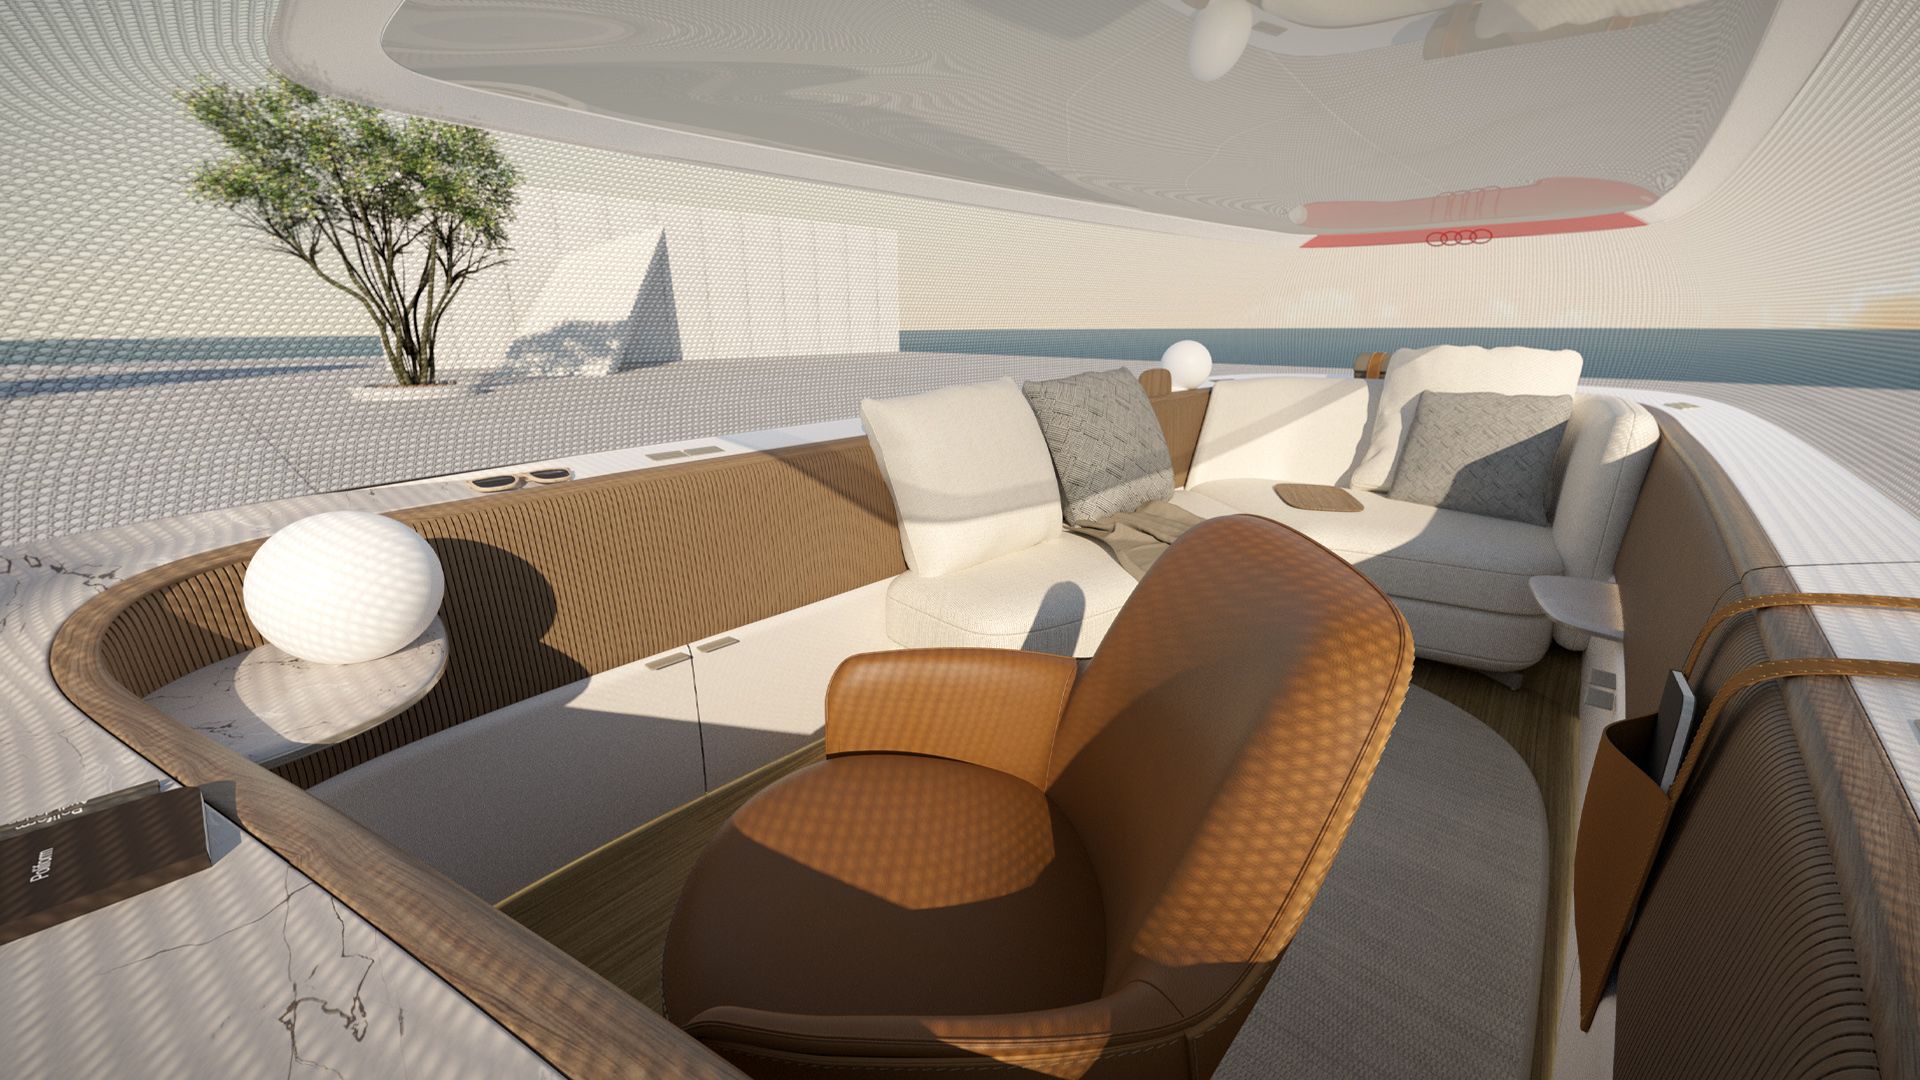 Poliform’s interior design for the Audi urbansphere concept.